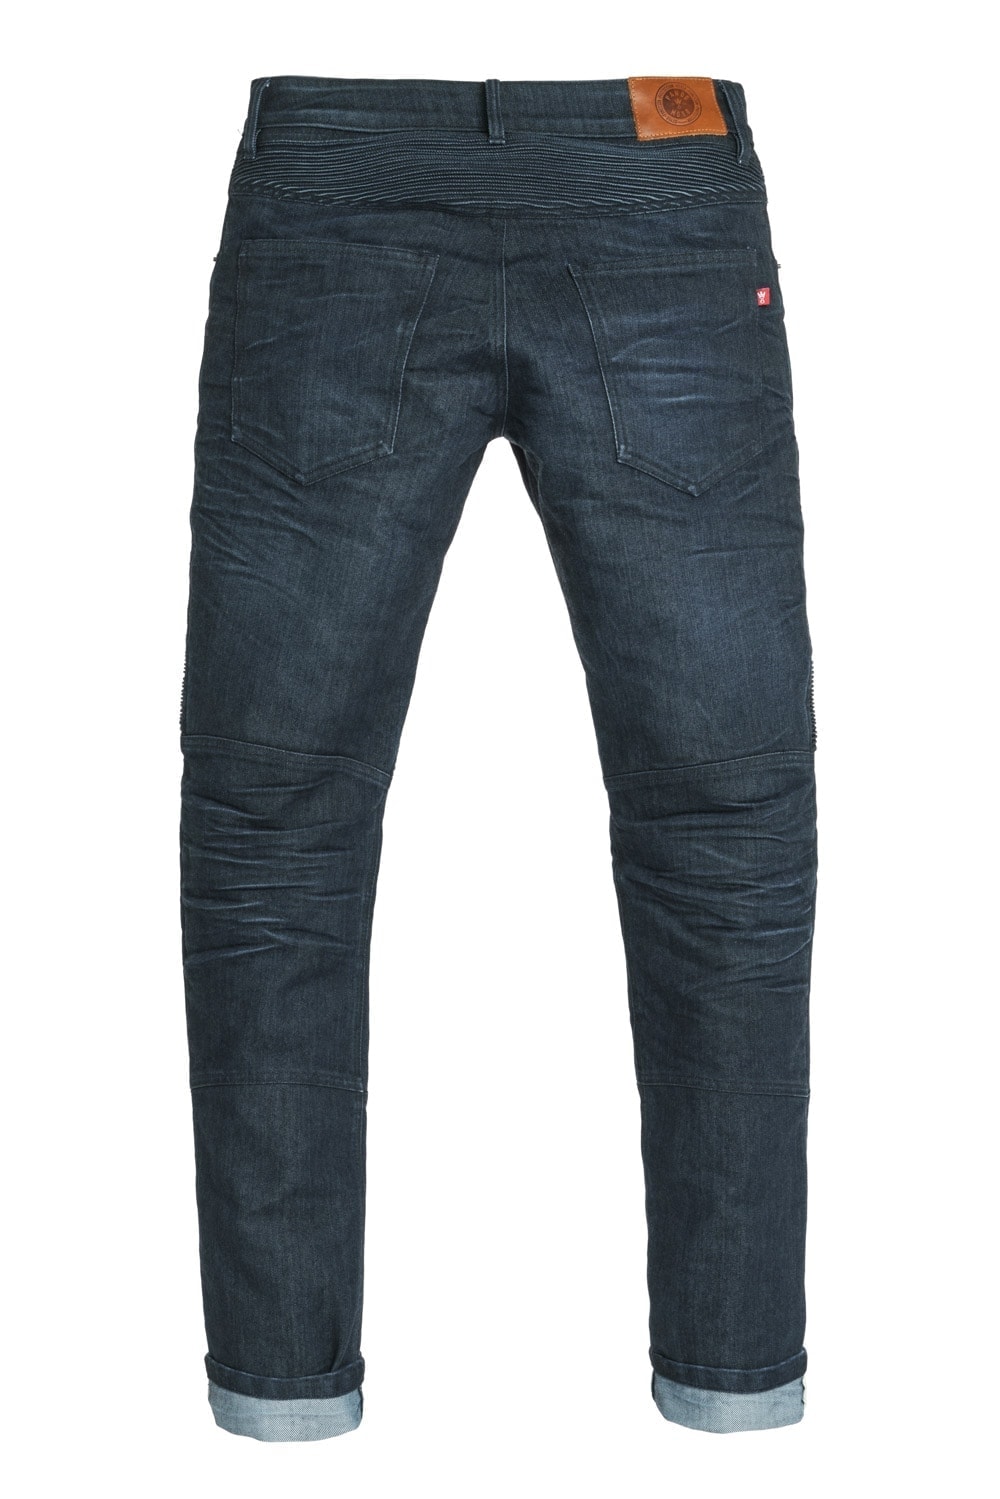 Men Motorcycle Denim Jeans Slim Fit Reinforced Jeans Made With DuPont™ Kevlar®